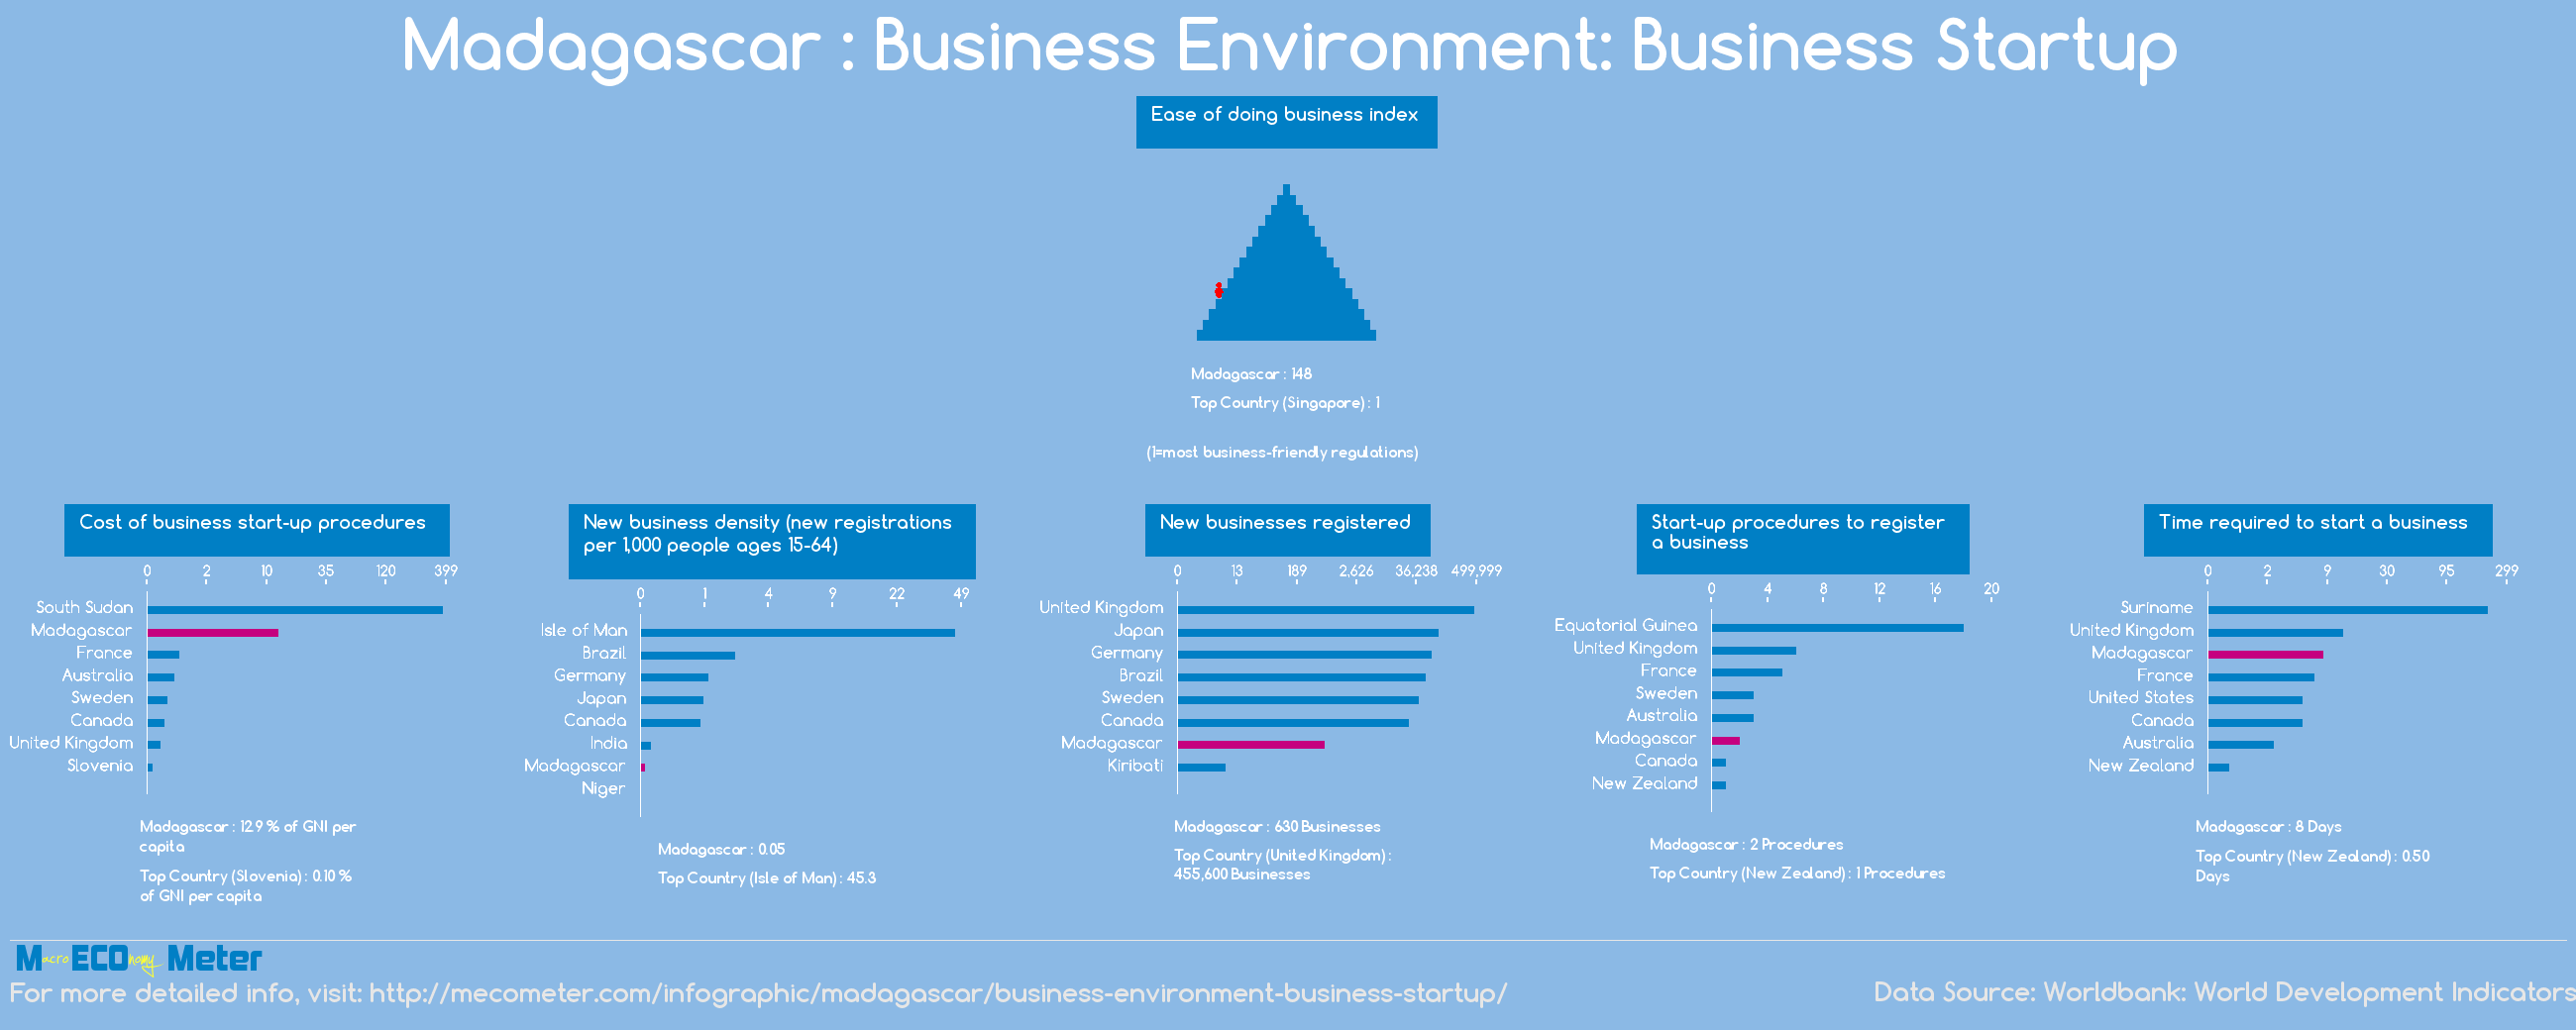 Madagascar : Business Environment: Business Startup